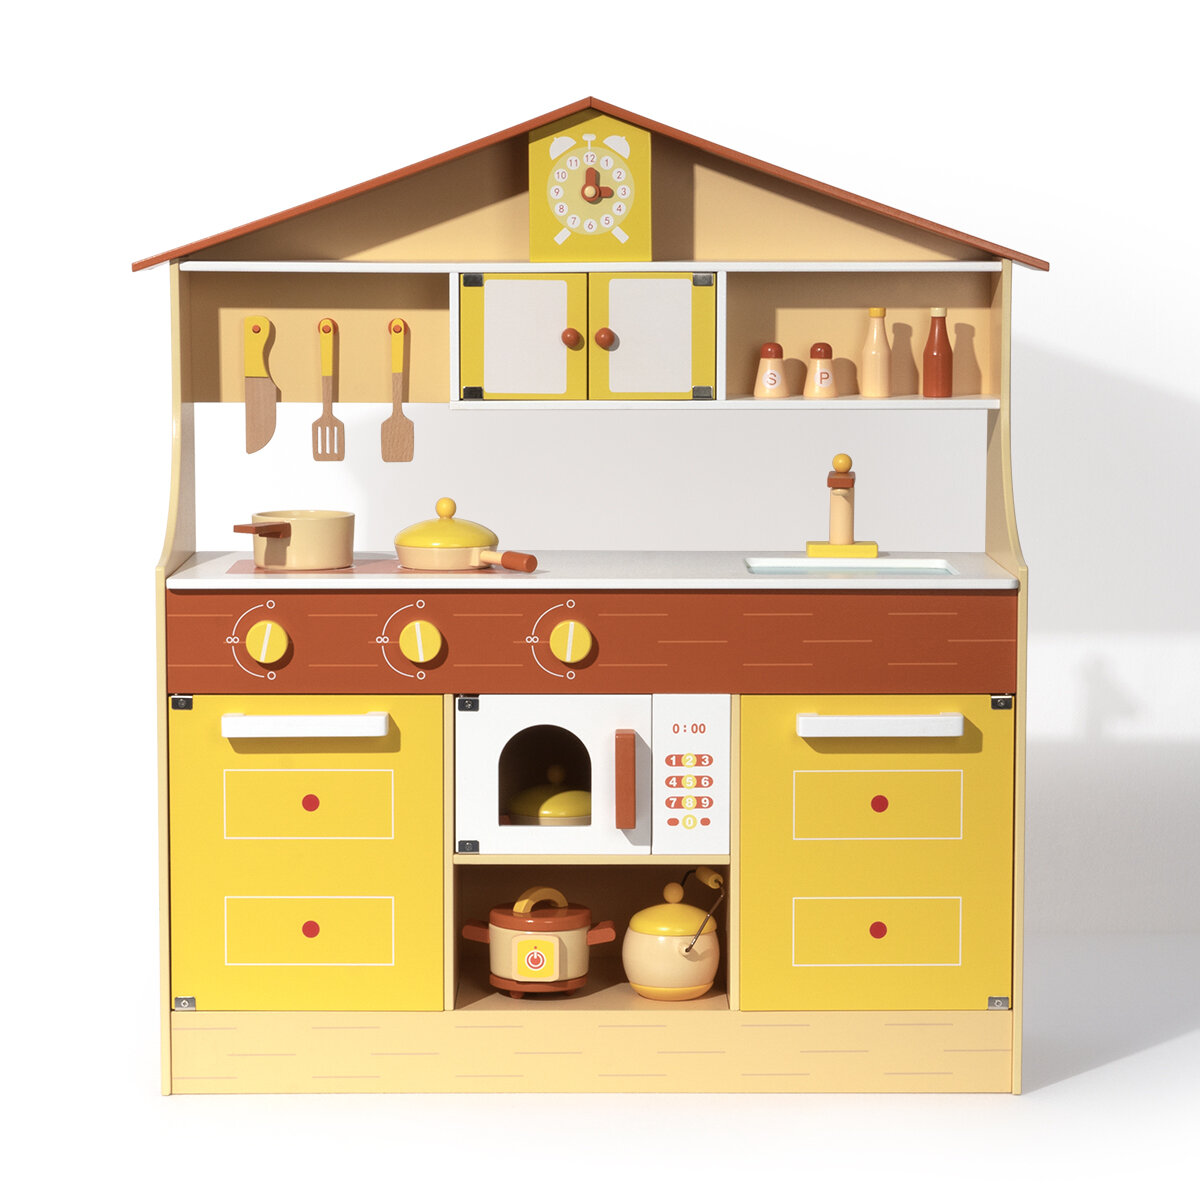 Robotime Wooden Play Kitchen Set Reviews Wayfair